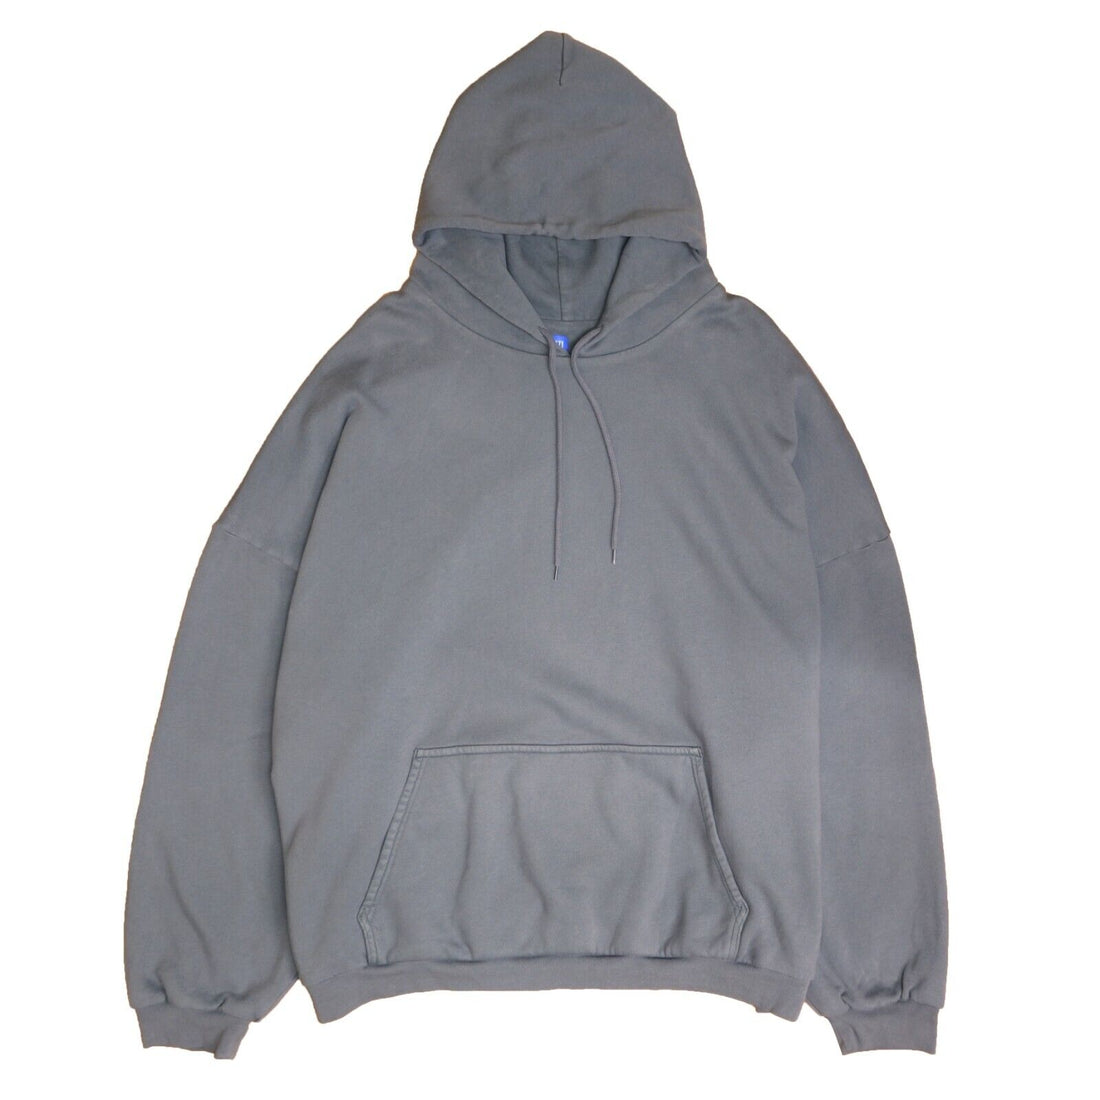 Yeezy Gap Unreleased Pullover Sweatshirt Hoodie Size XL Dark Gray